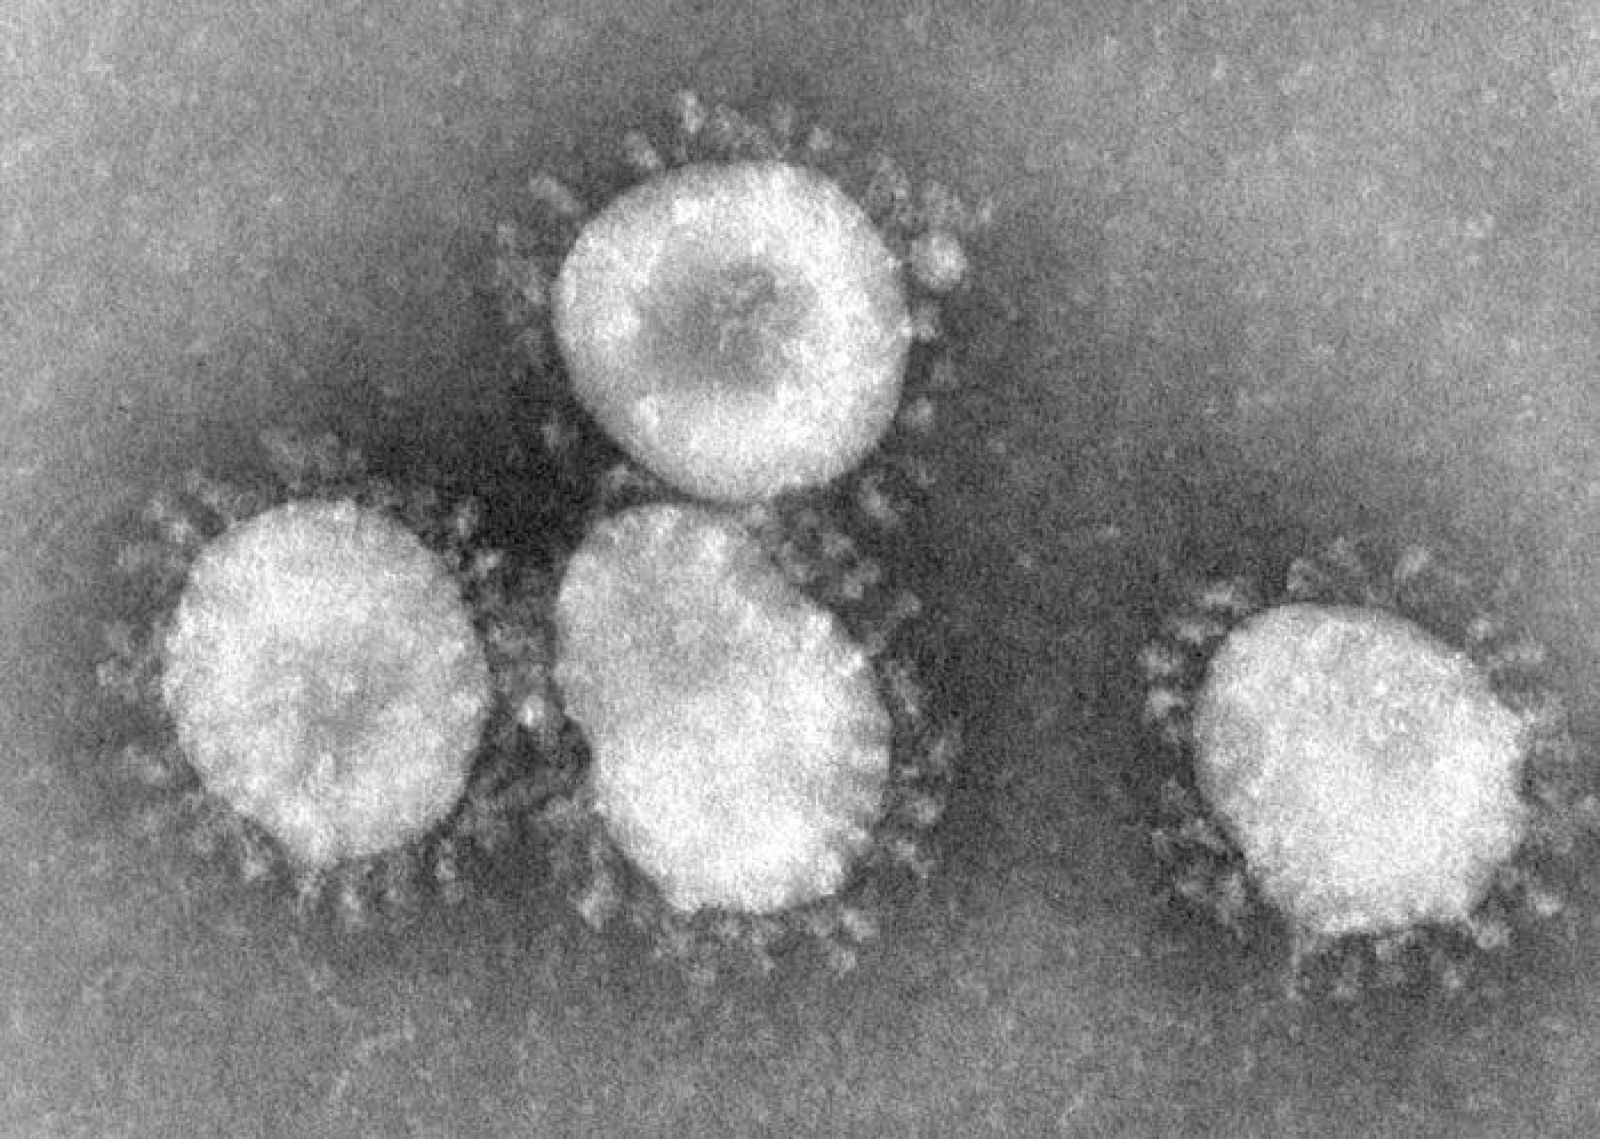 Imagen de microscopio de un coronavirus.